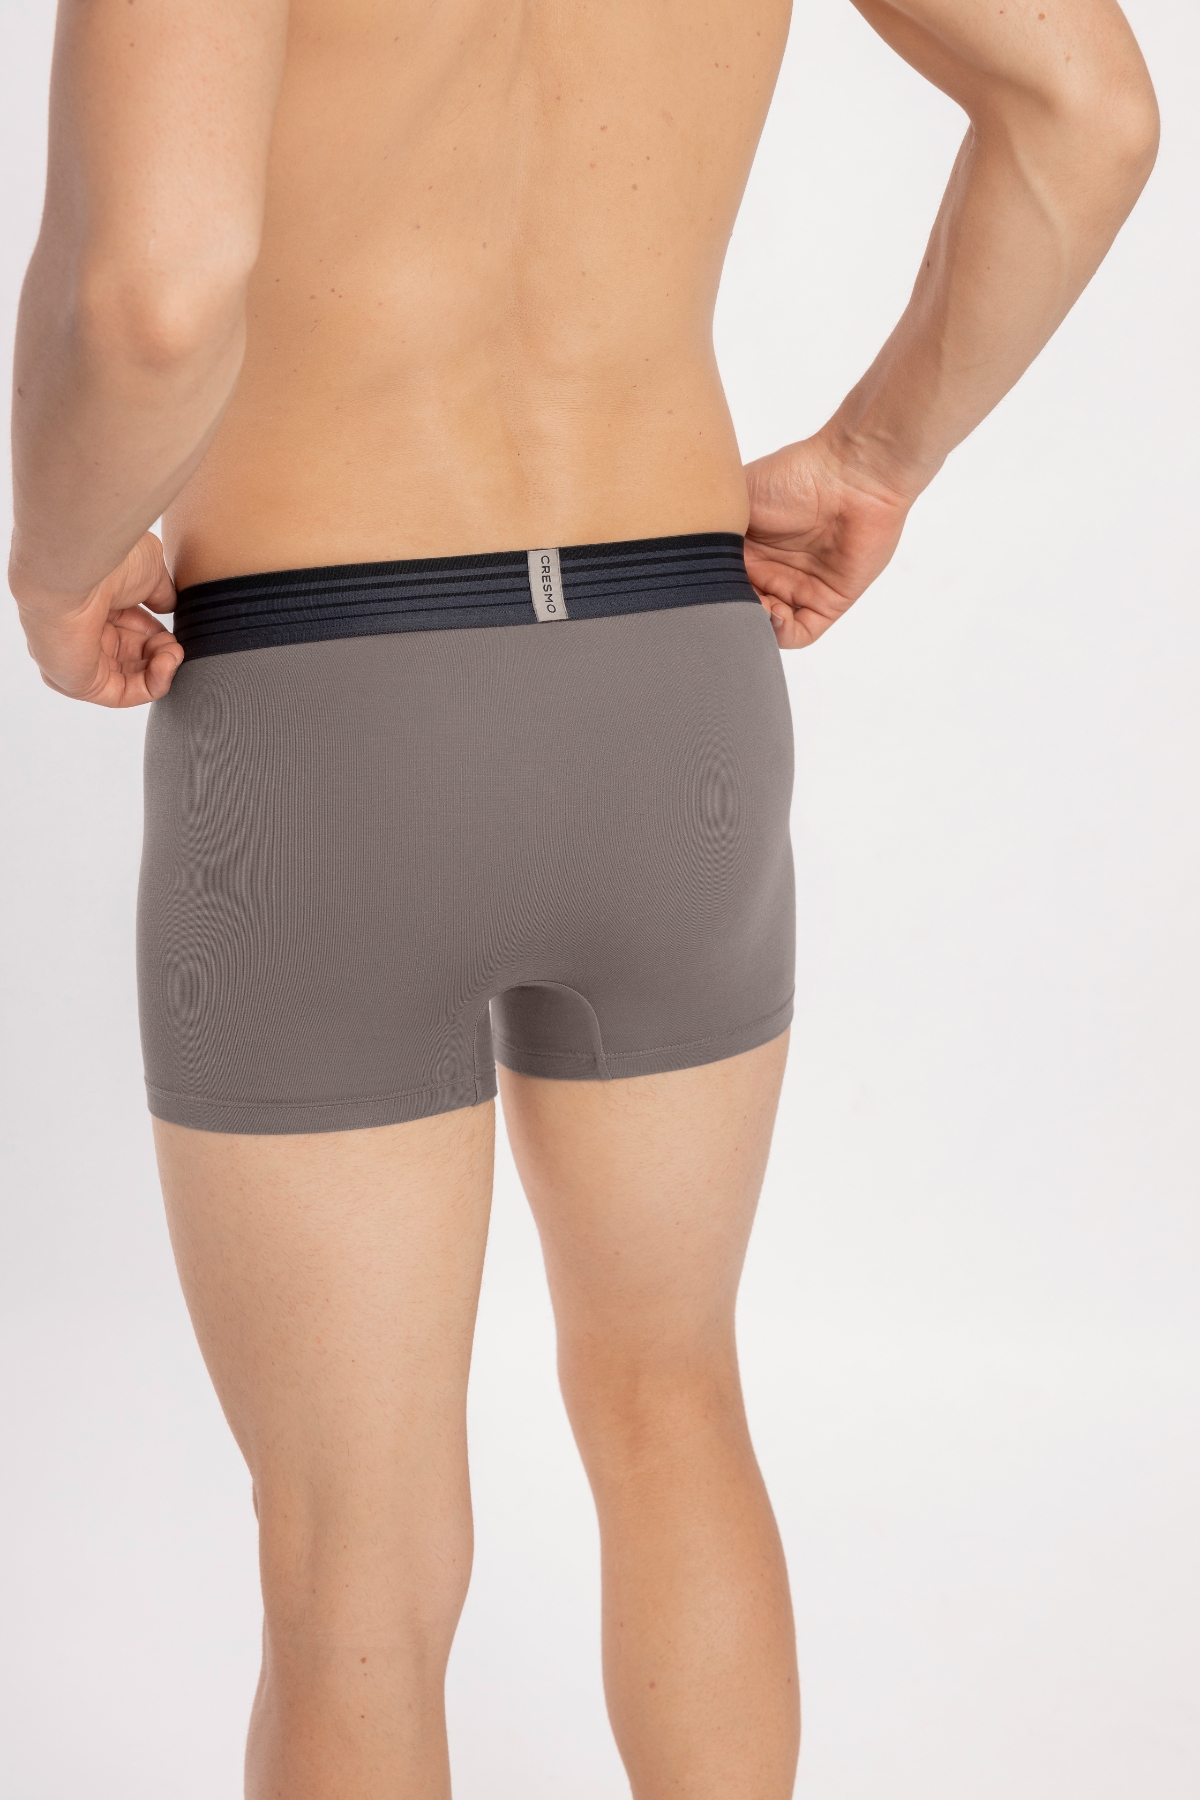 CRESMO | CRESMO Men's Anti-Microbial Micro Modal Underwear Breathable Ultra Soft Trunk 2